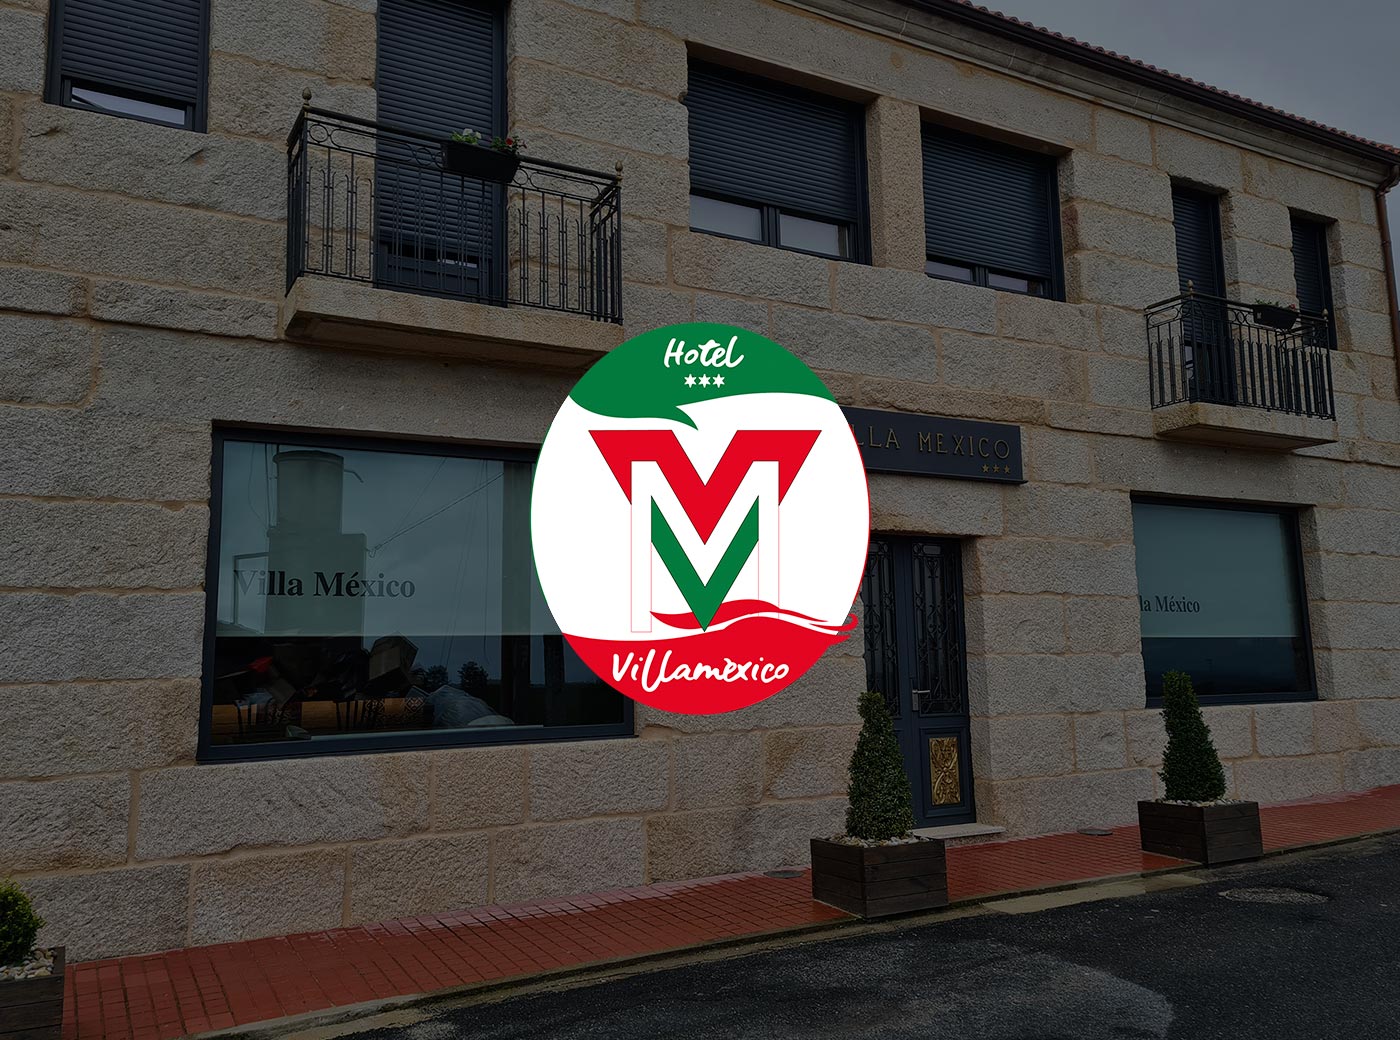 img destacada hotel villa - inova3 - Marketing digital desde ourense